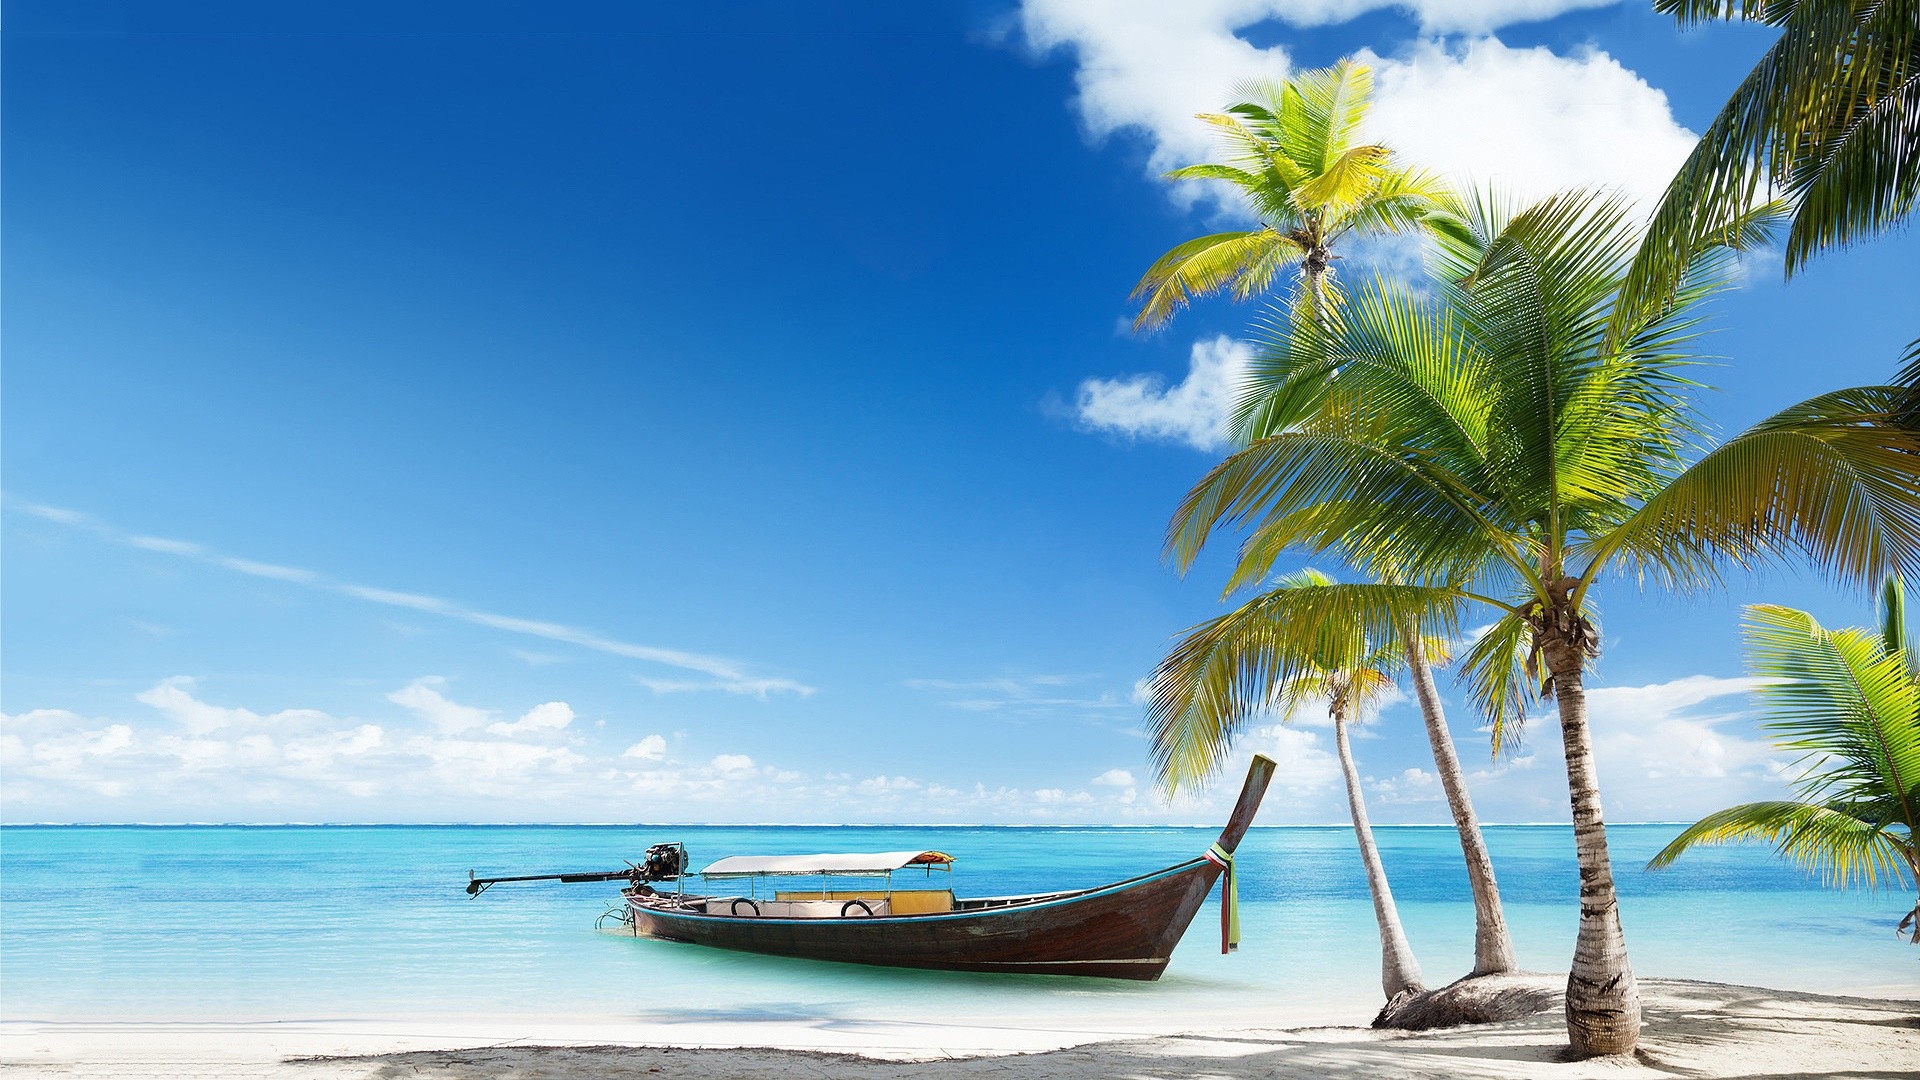 Beach HD Wallpaper Free Download. Boat Tropical Beach